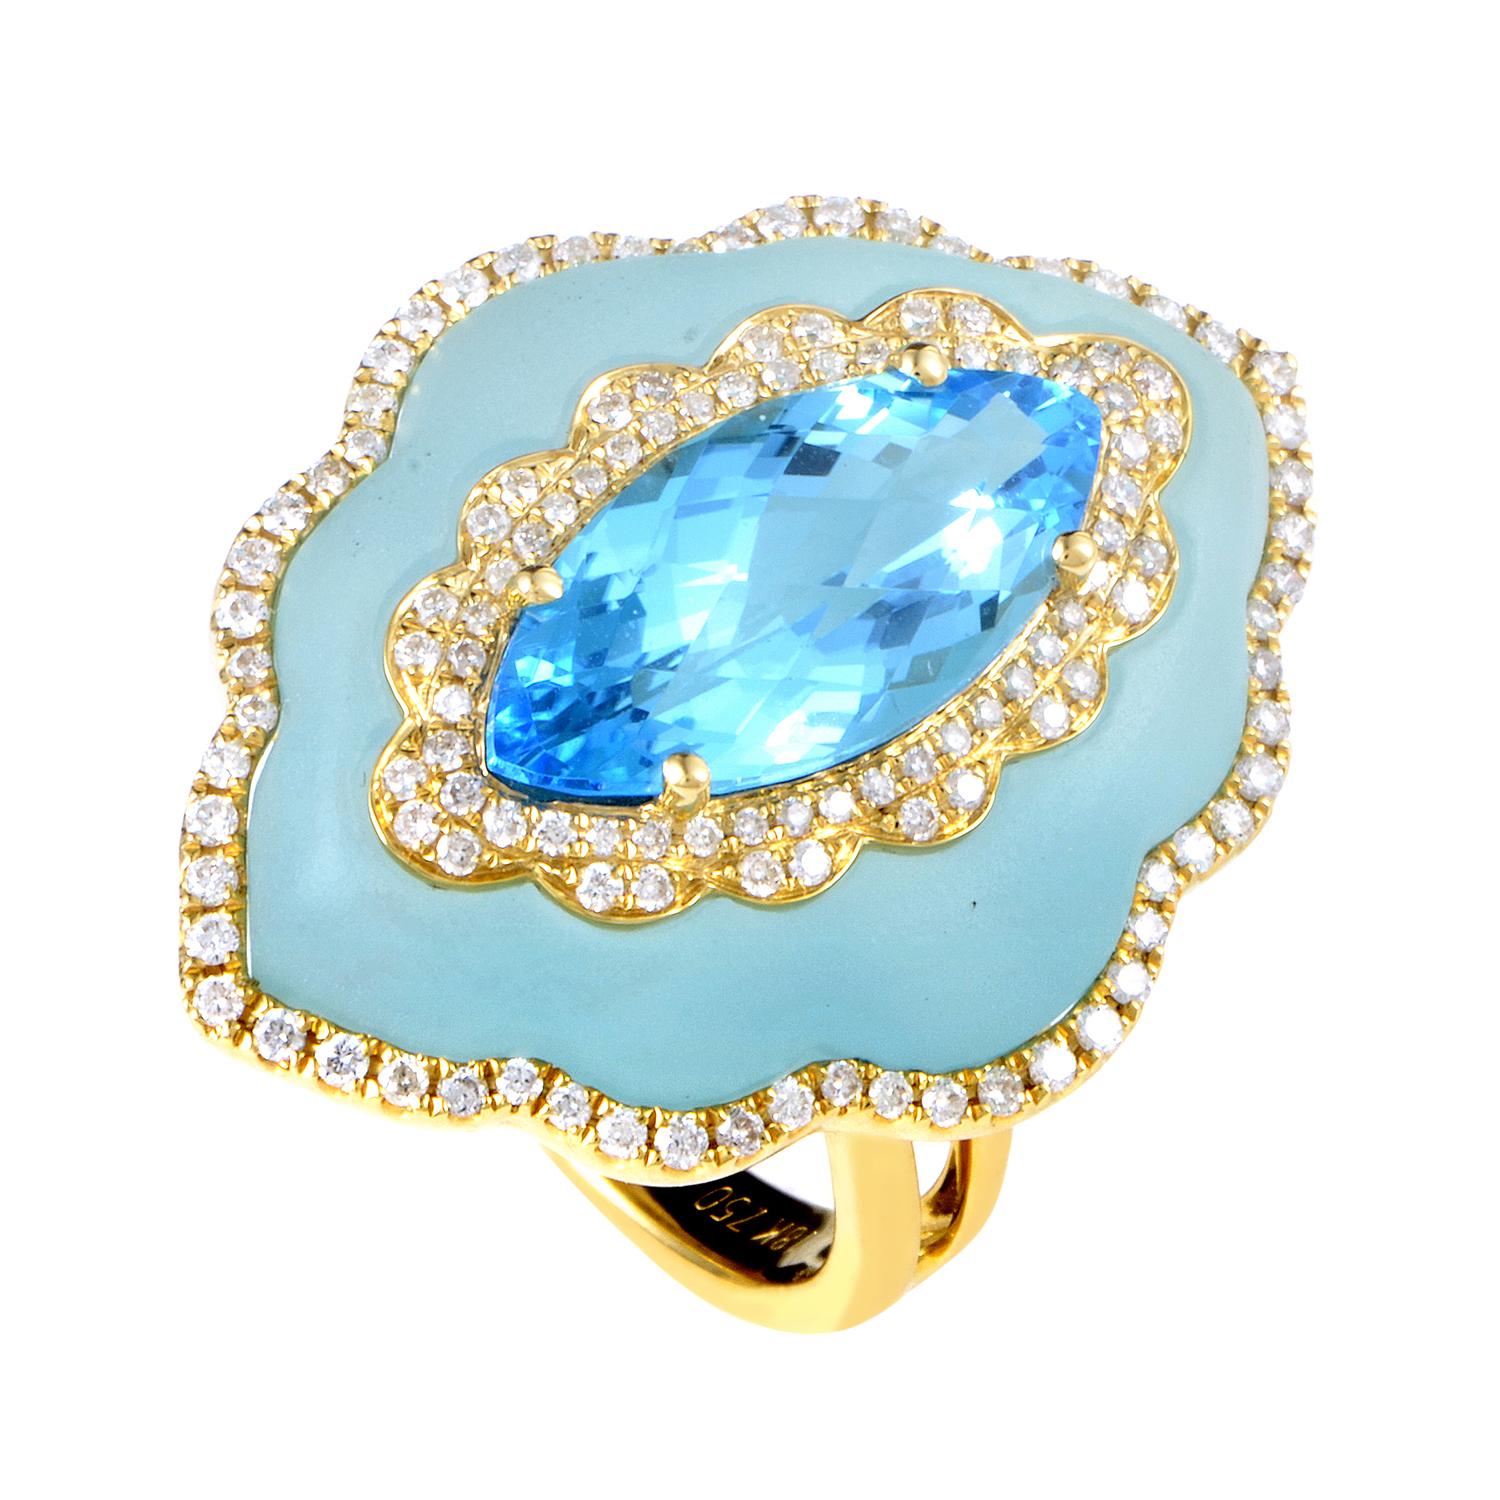 Women's 18 Karat Yellow Gold Diamond and Blue Topaz Gemstone Ring